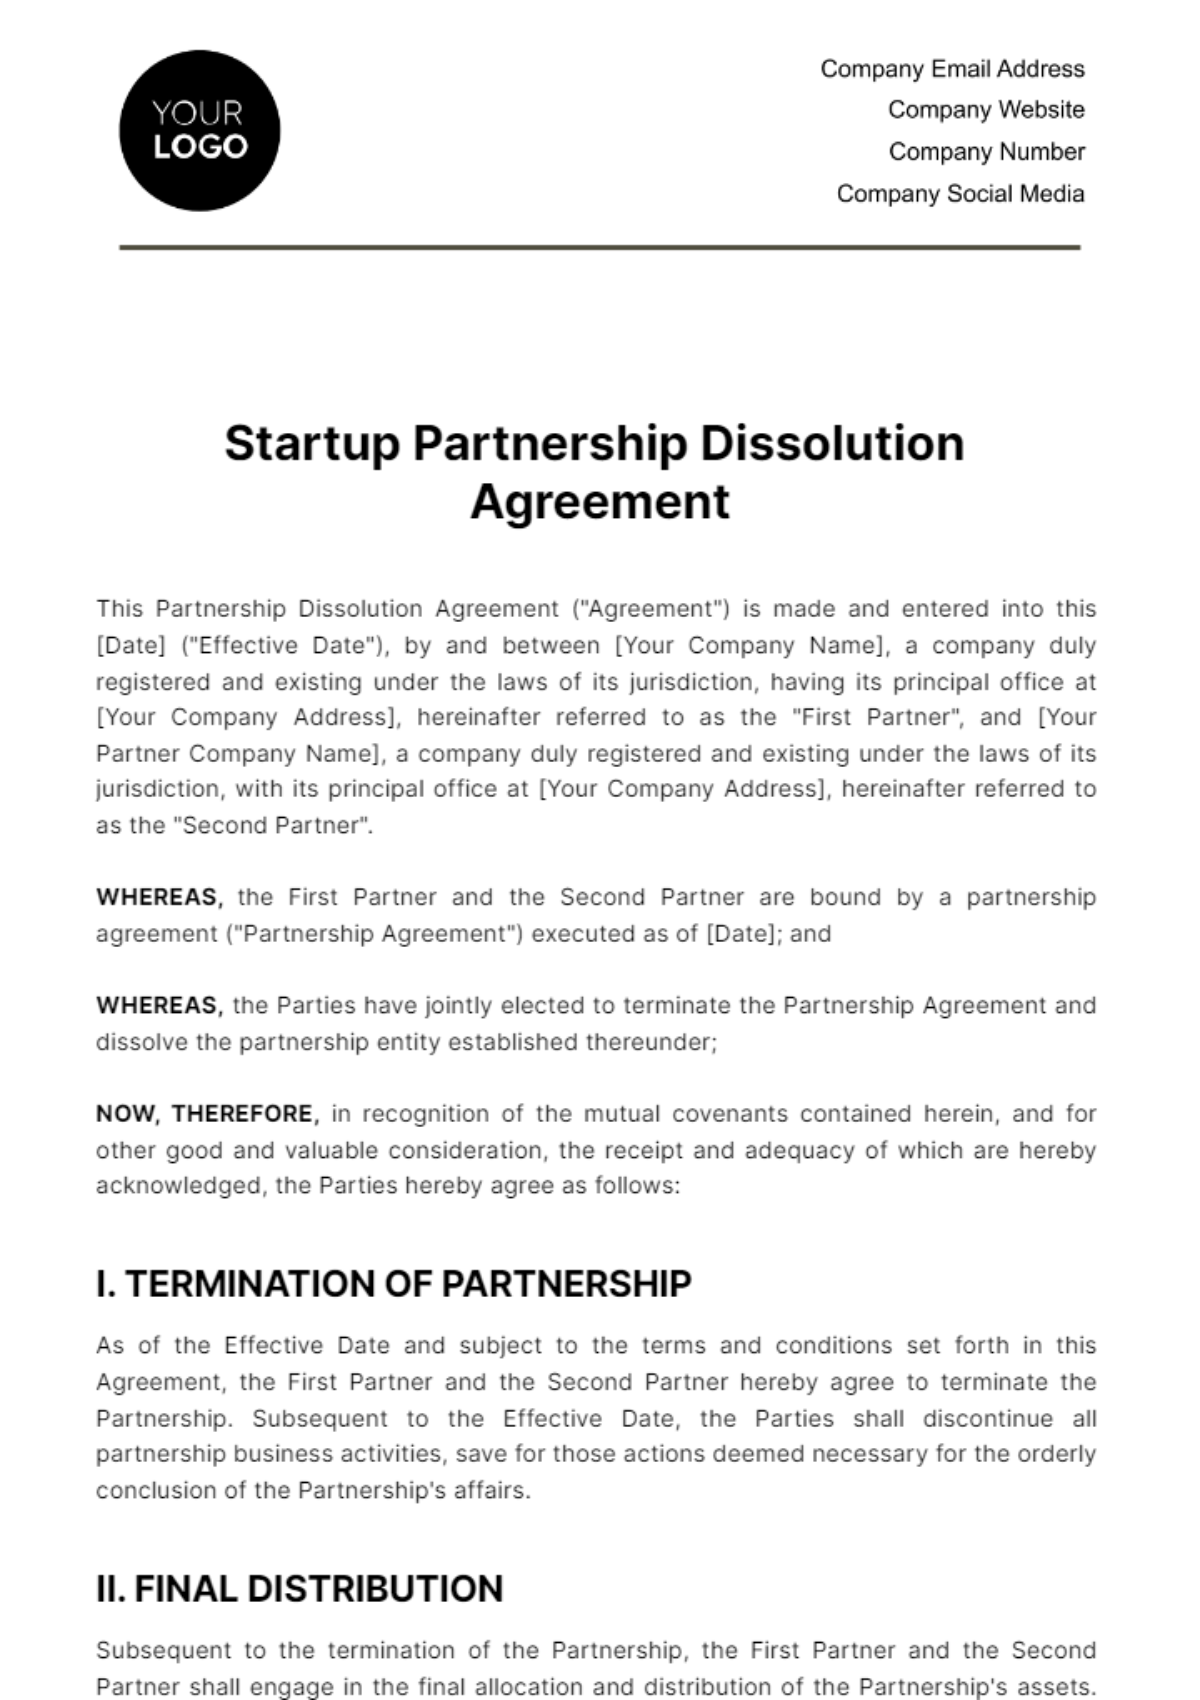 Free Startup Partnership Dissolution Agreement Template